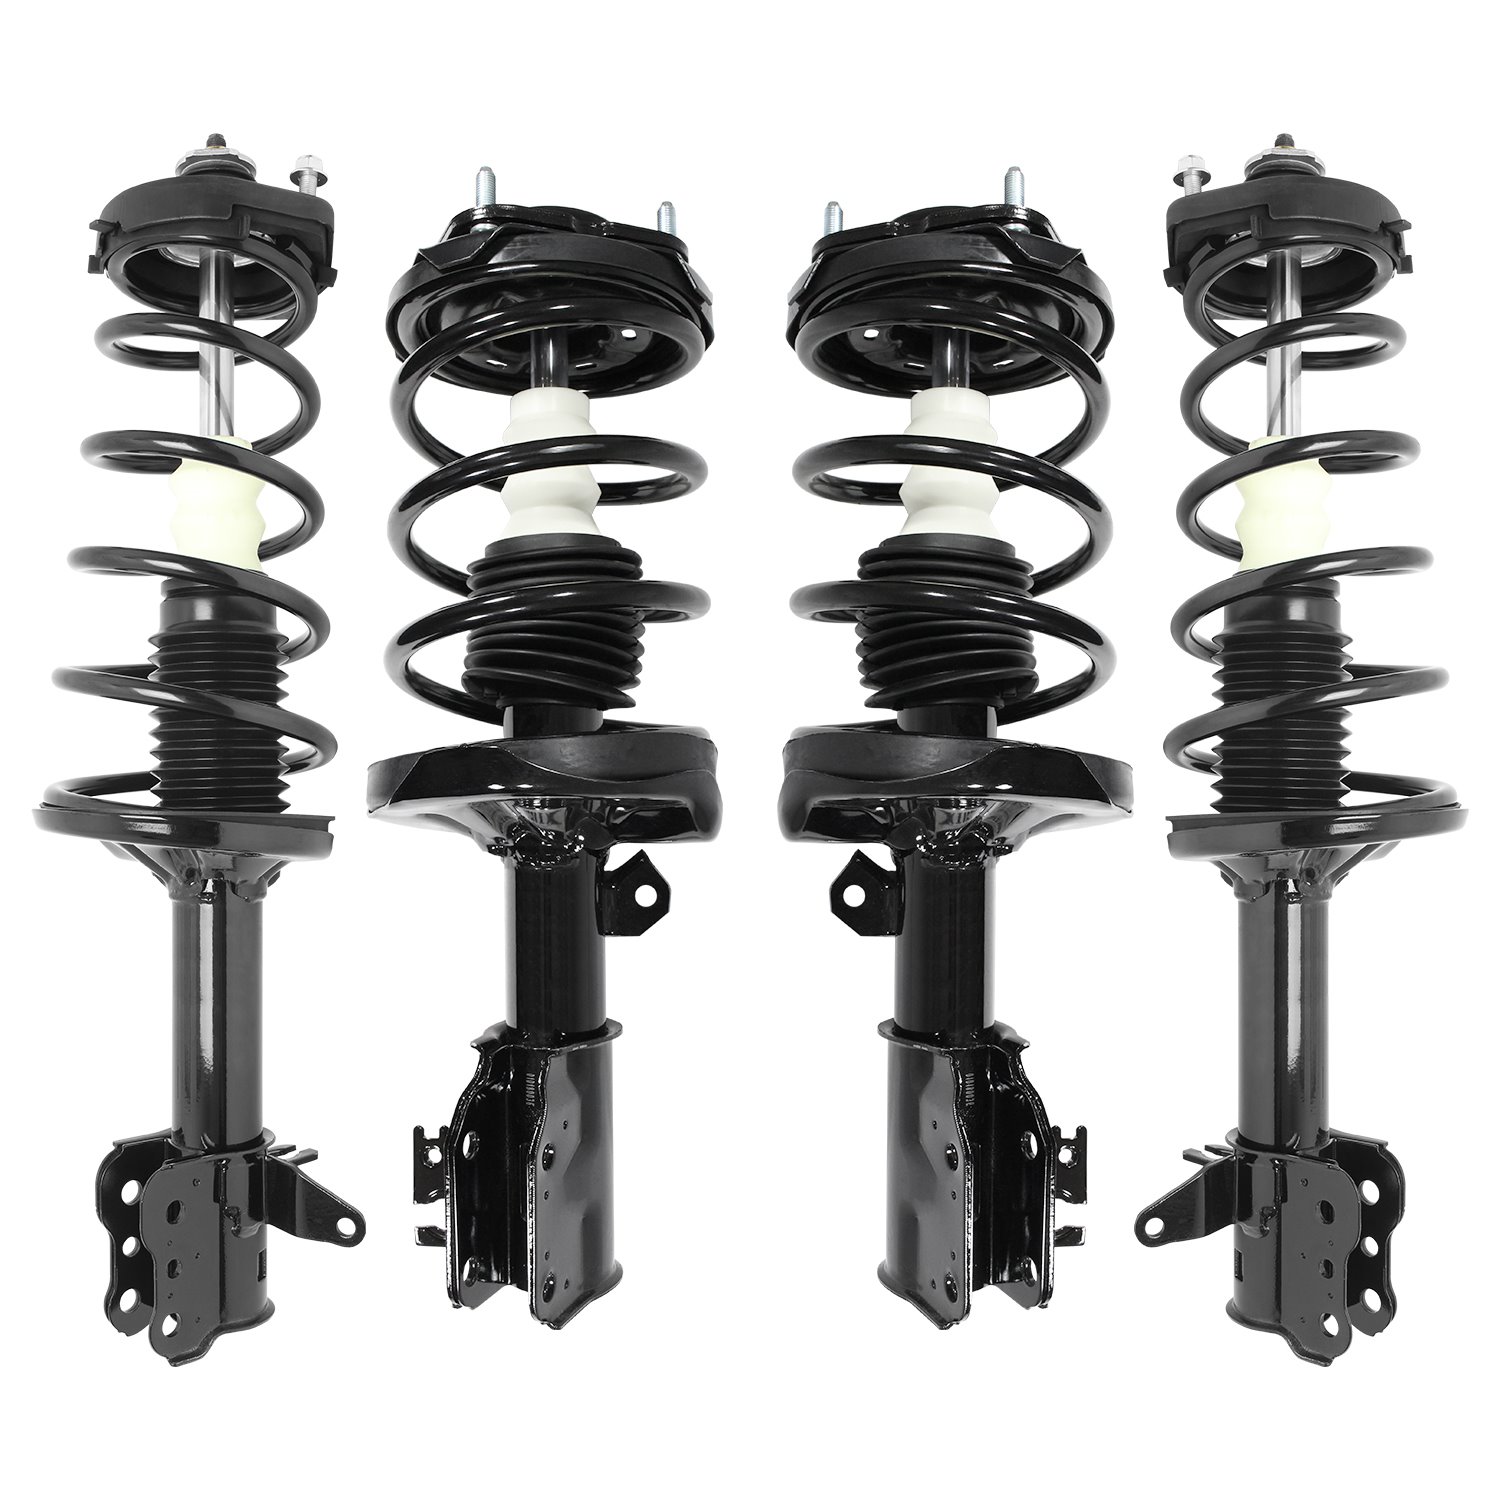 4-11685-15171-001 Front & Rear Suspension Strut & Coil Spring Assembly Kit Fits Select Mazda Protege, Mazda Protege5